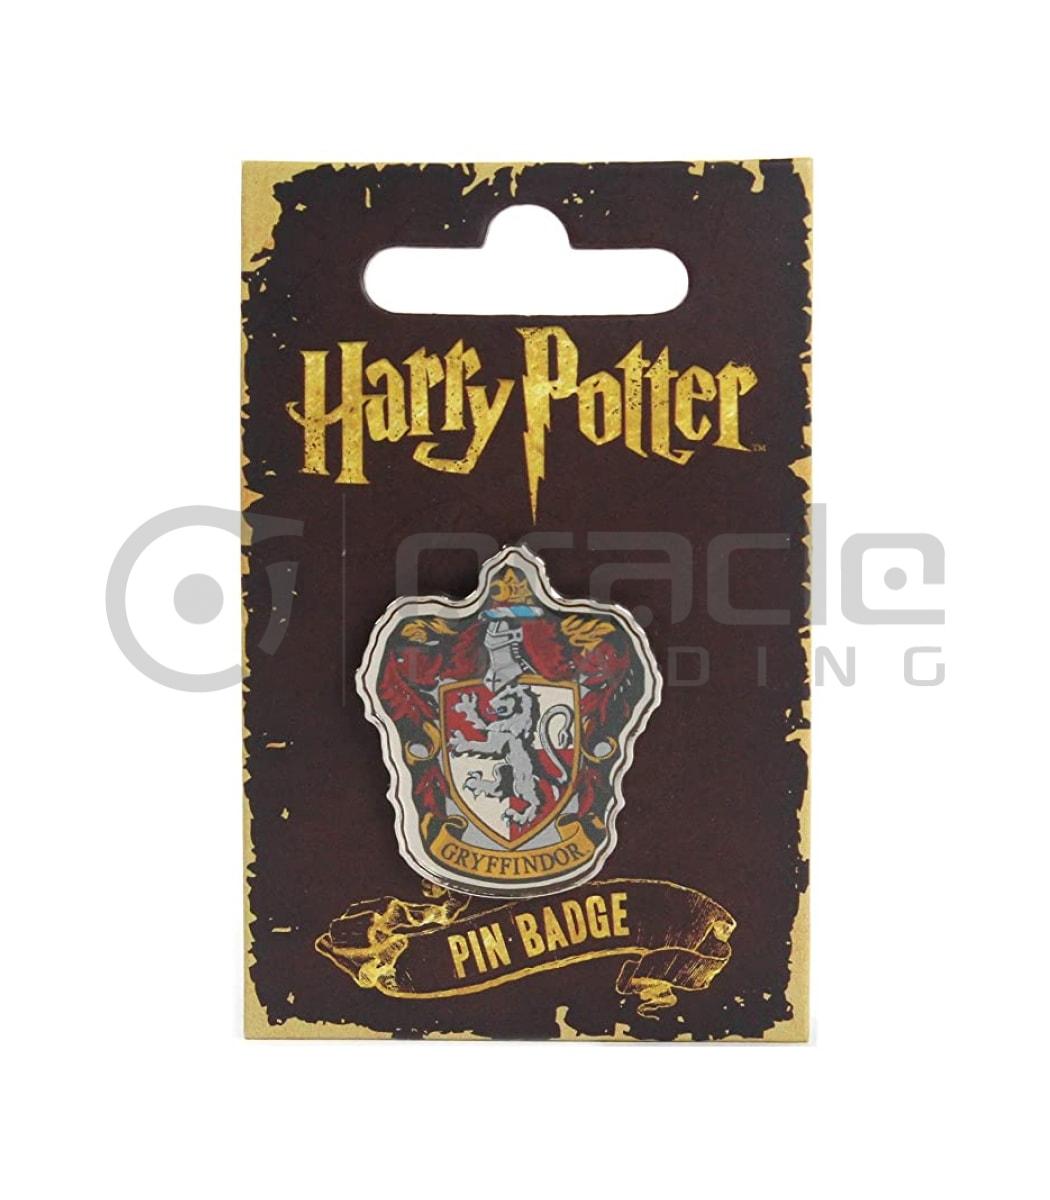 Harry Potter Pin Badge - Gryffindor